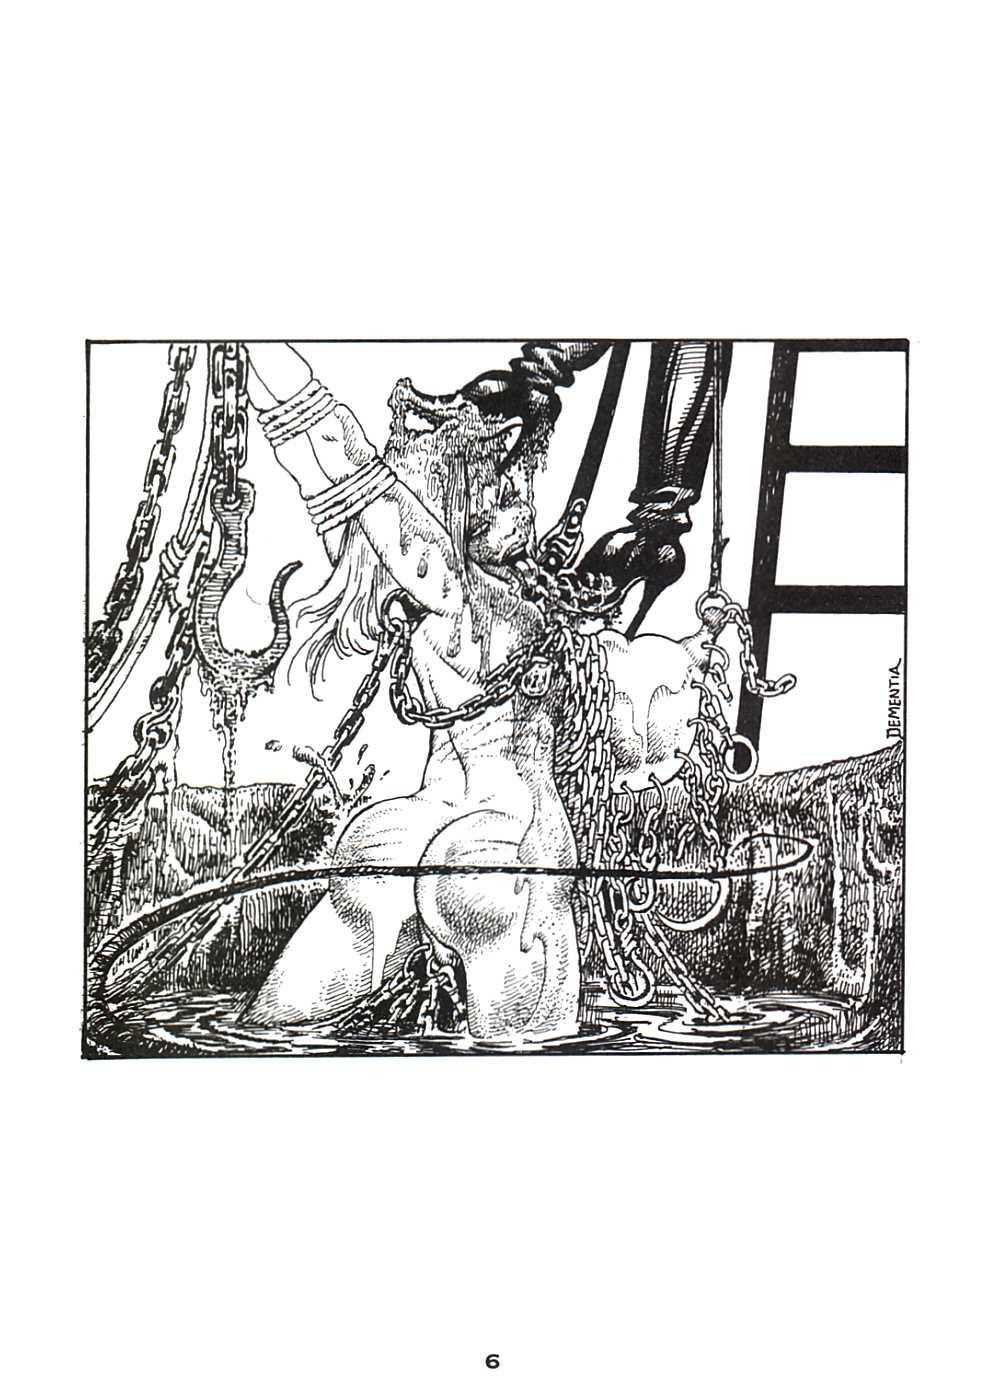 evil rope tied breast bondage artwork and sexual erotica #69644798